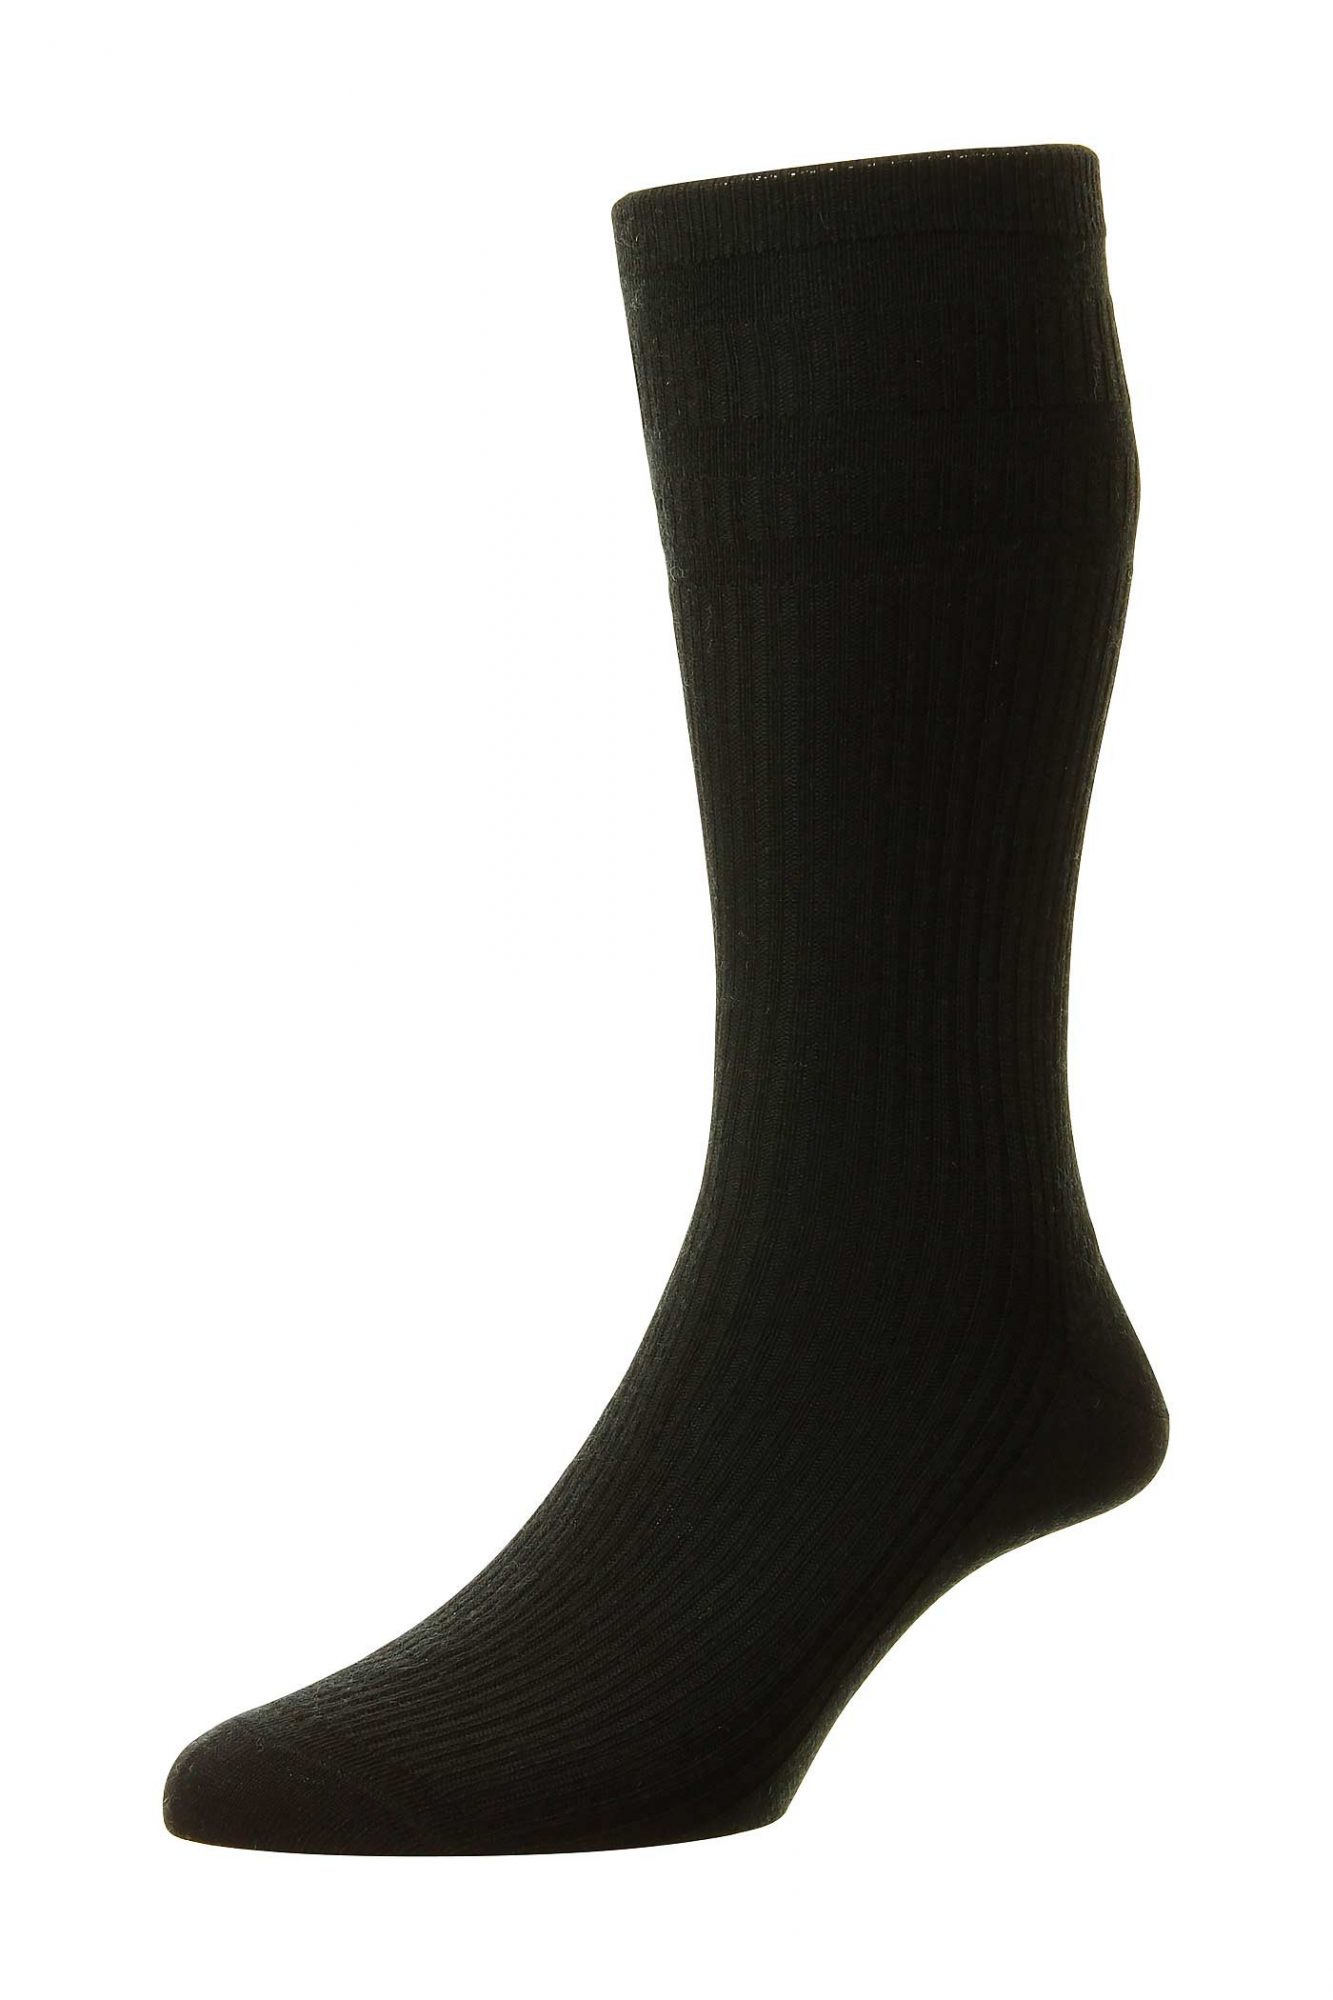 H J Socks SOFT TOP WOOL MIX SOCKS HJ90 - Socks - Barsleys Department Store